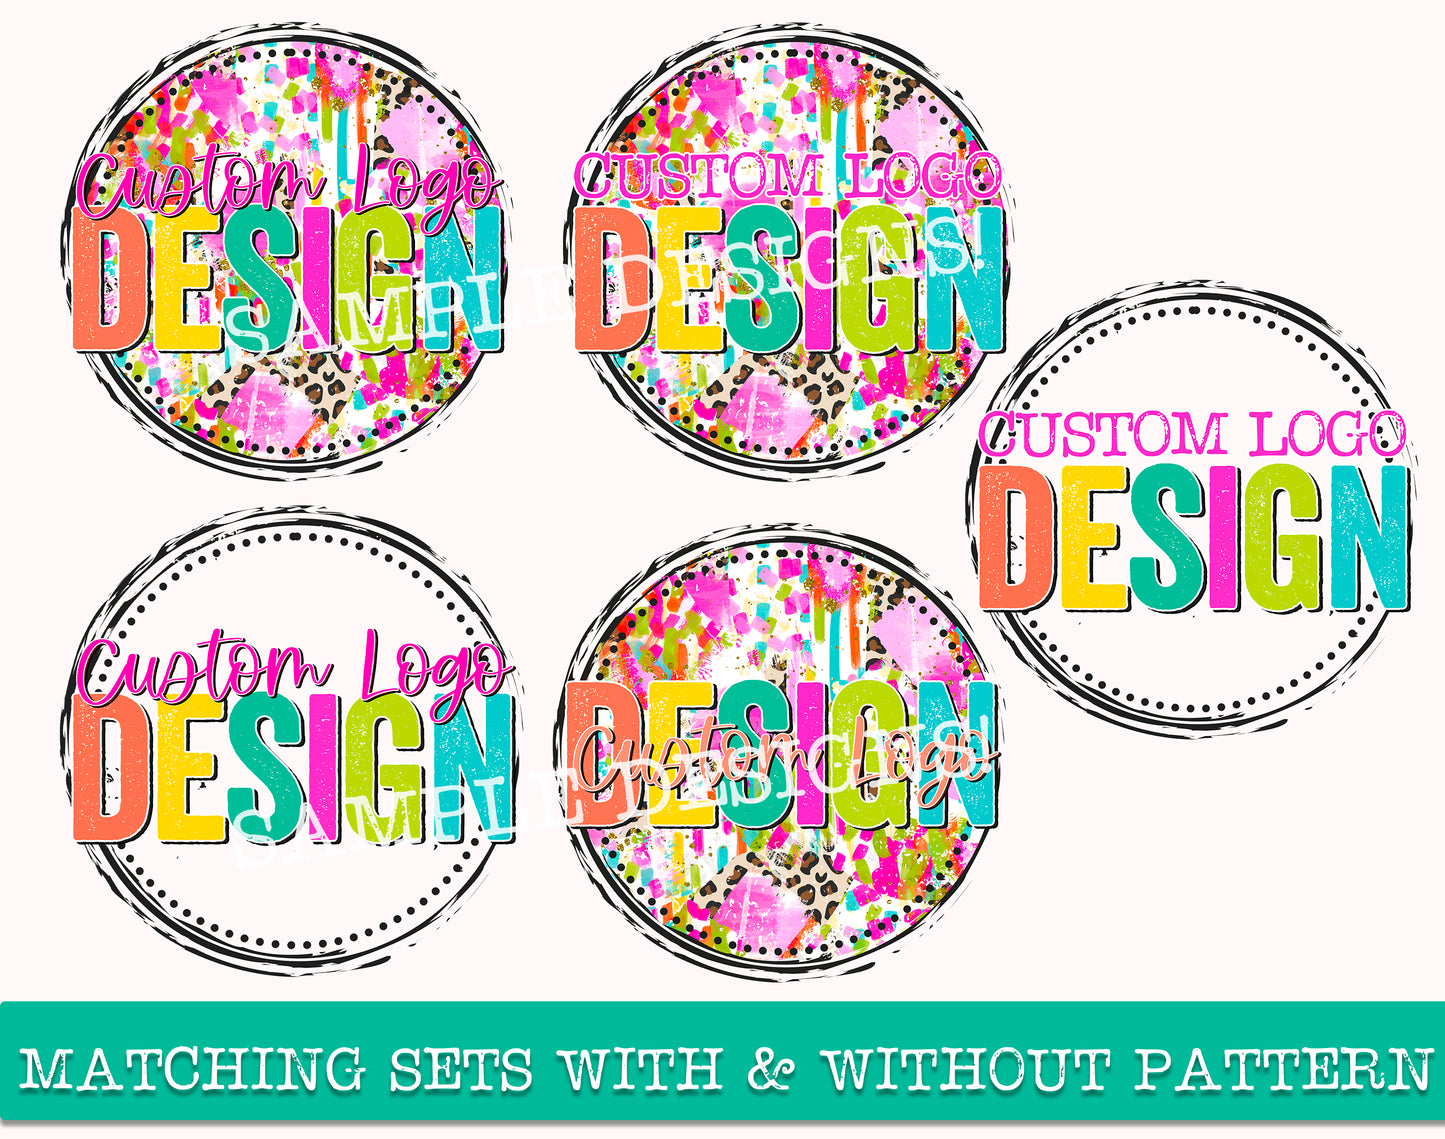 Custom Logo or Design - Bright Strokes Theme